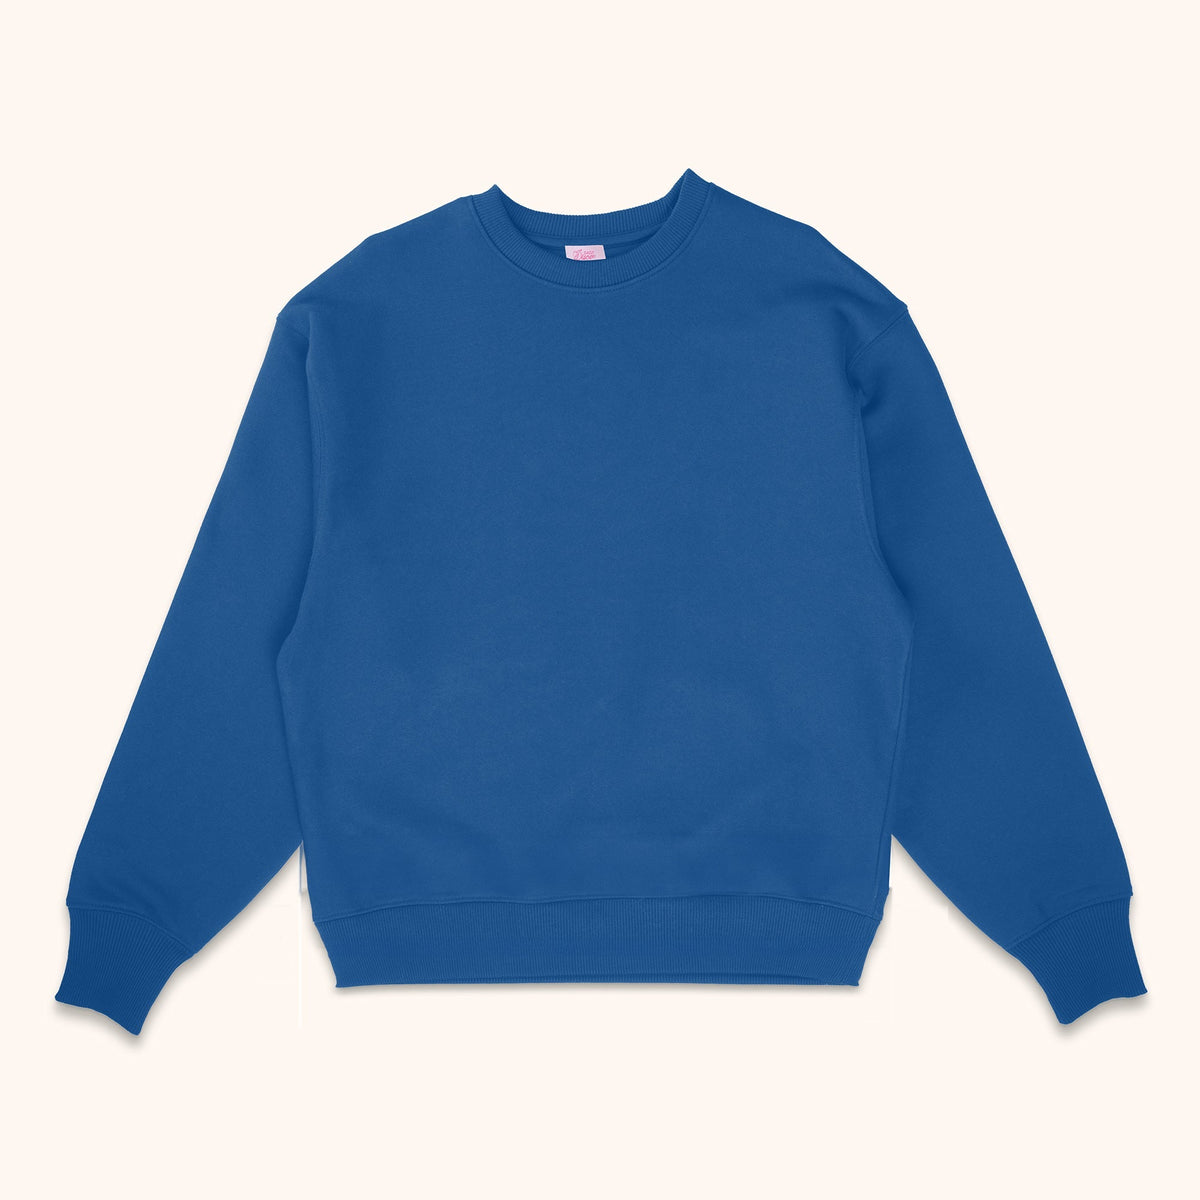 Embroidered Collar Custom Sweatshirt